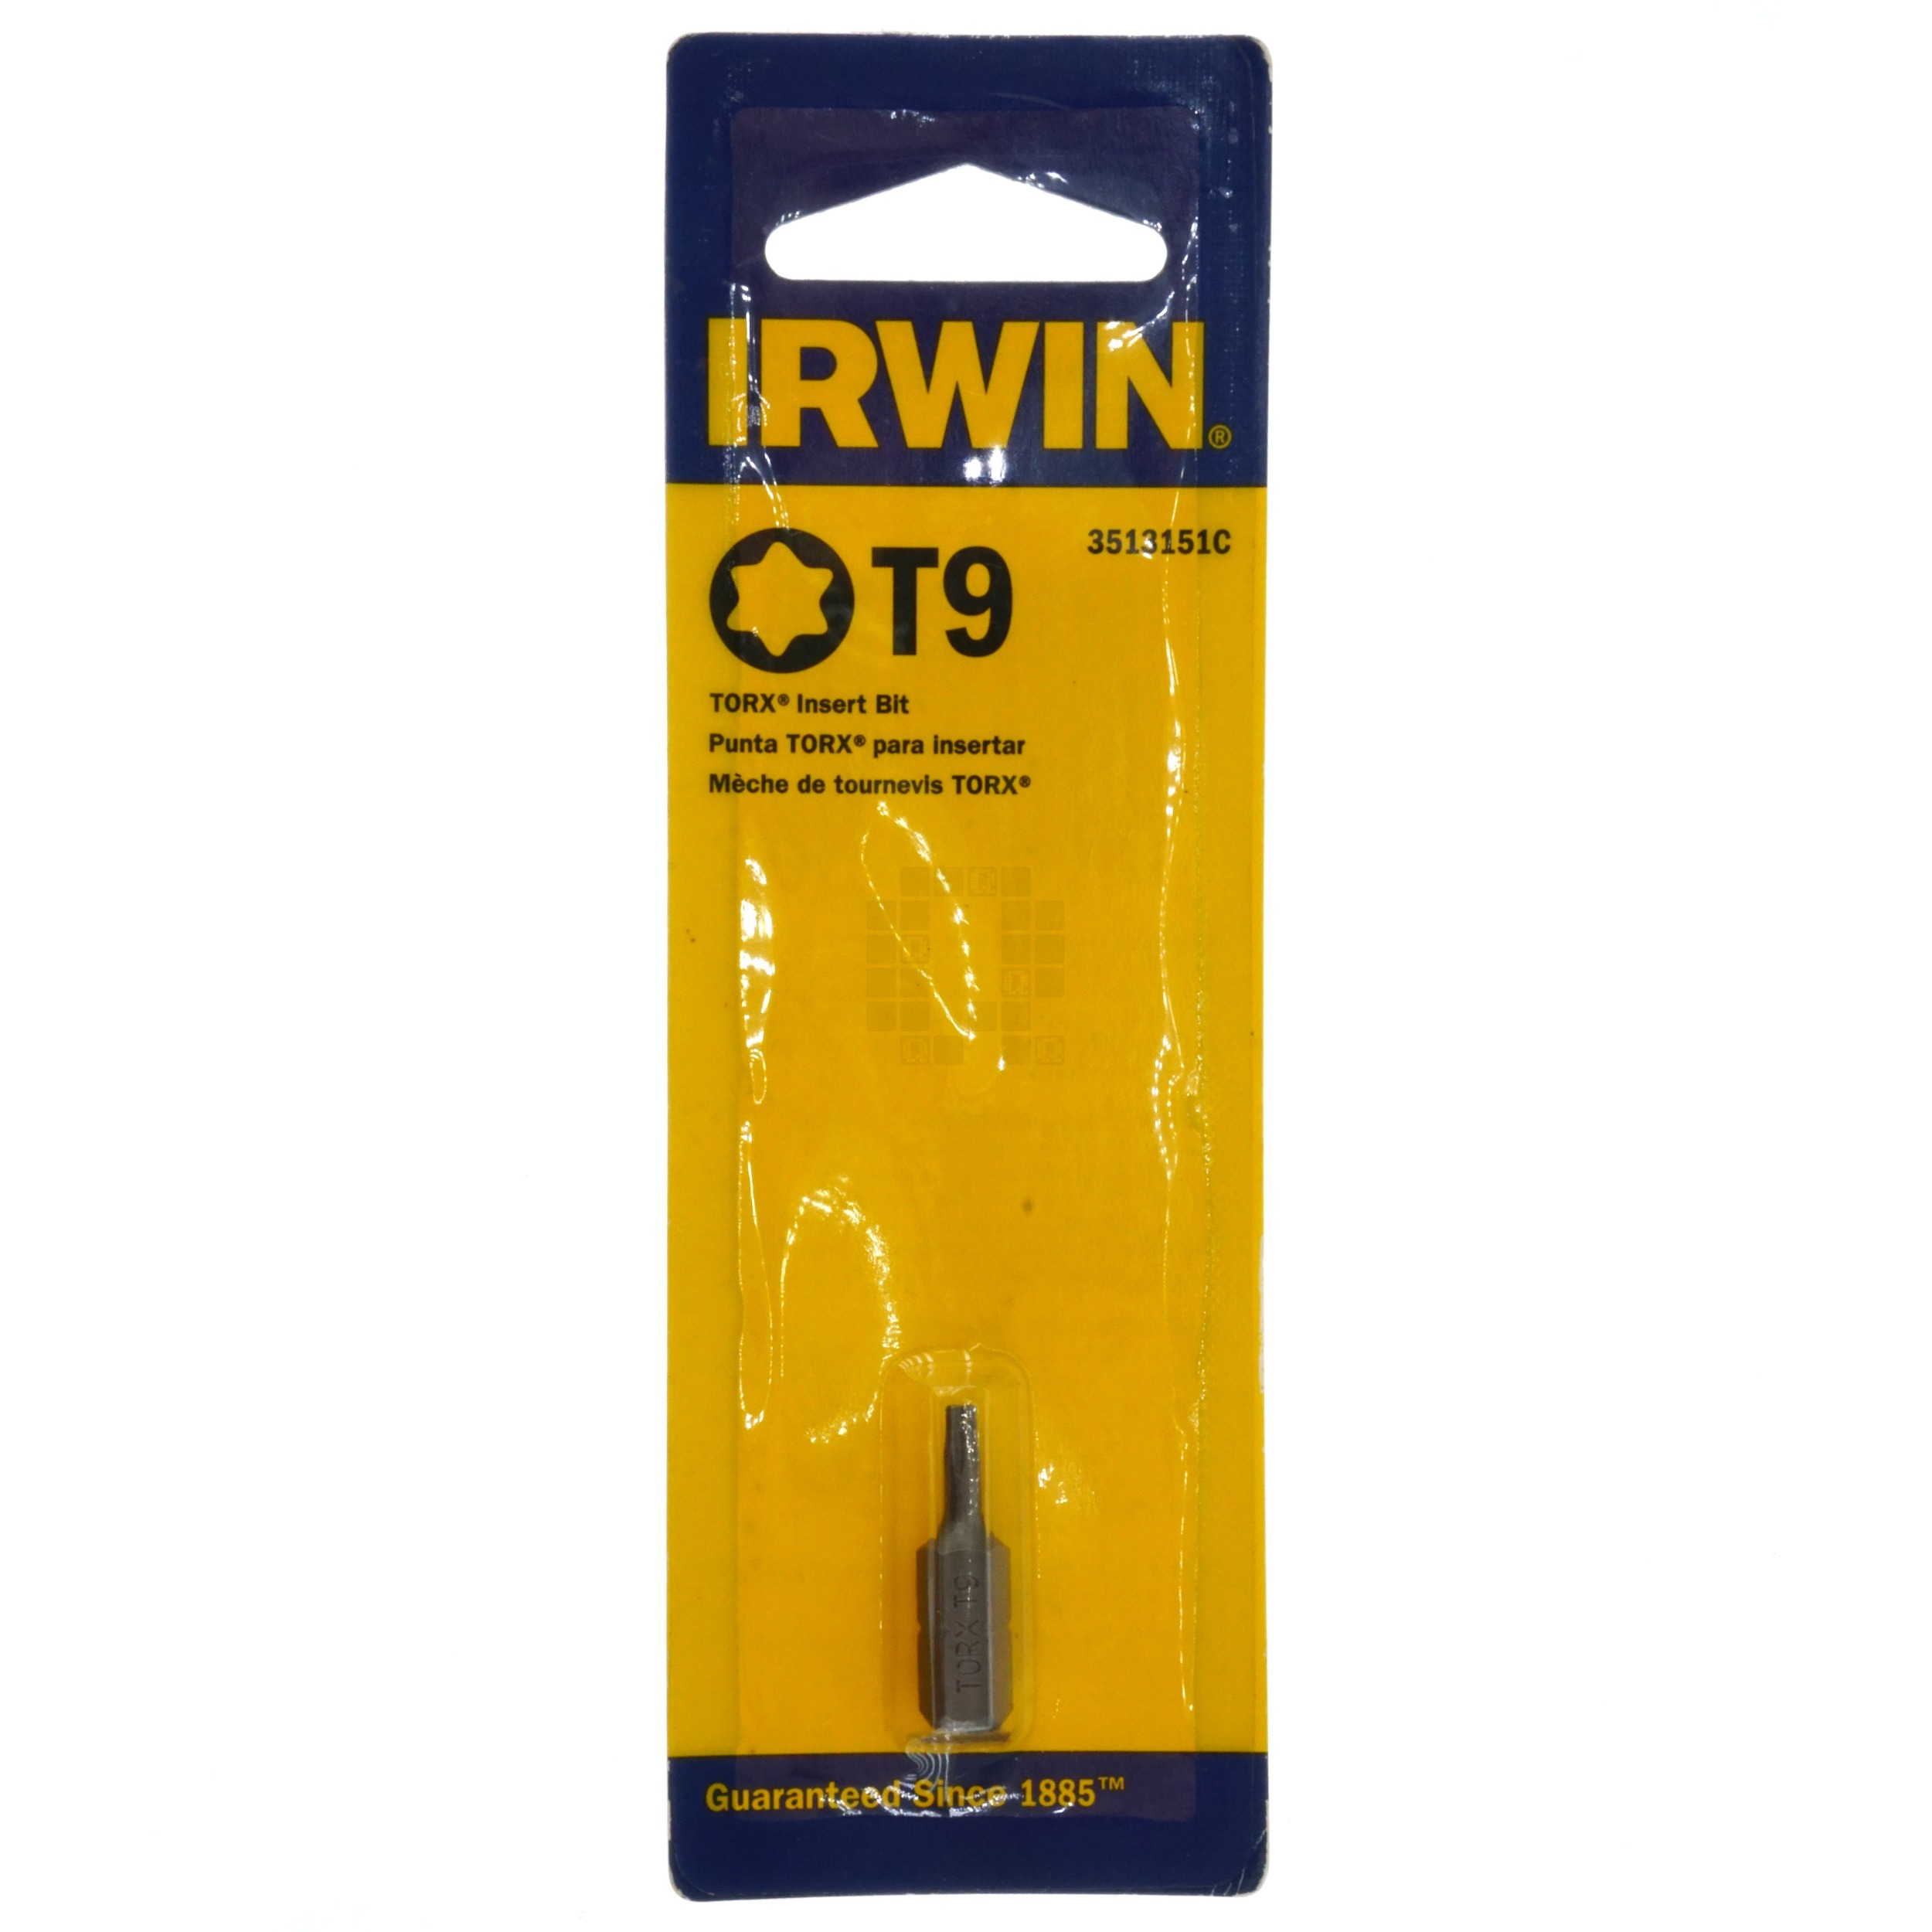 Irwin 3513151C T9 TORX Insert Bit, 1" Length